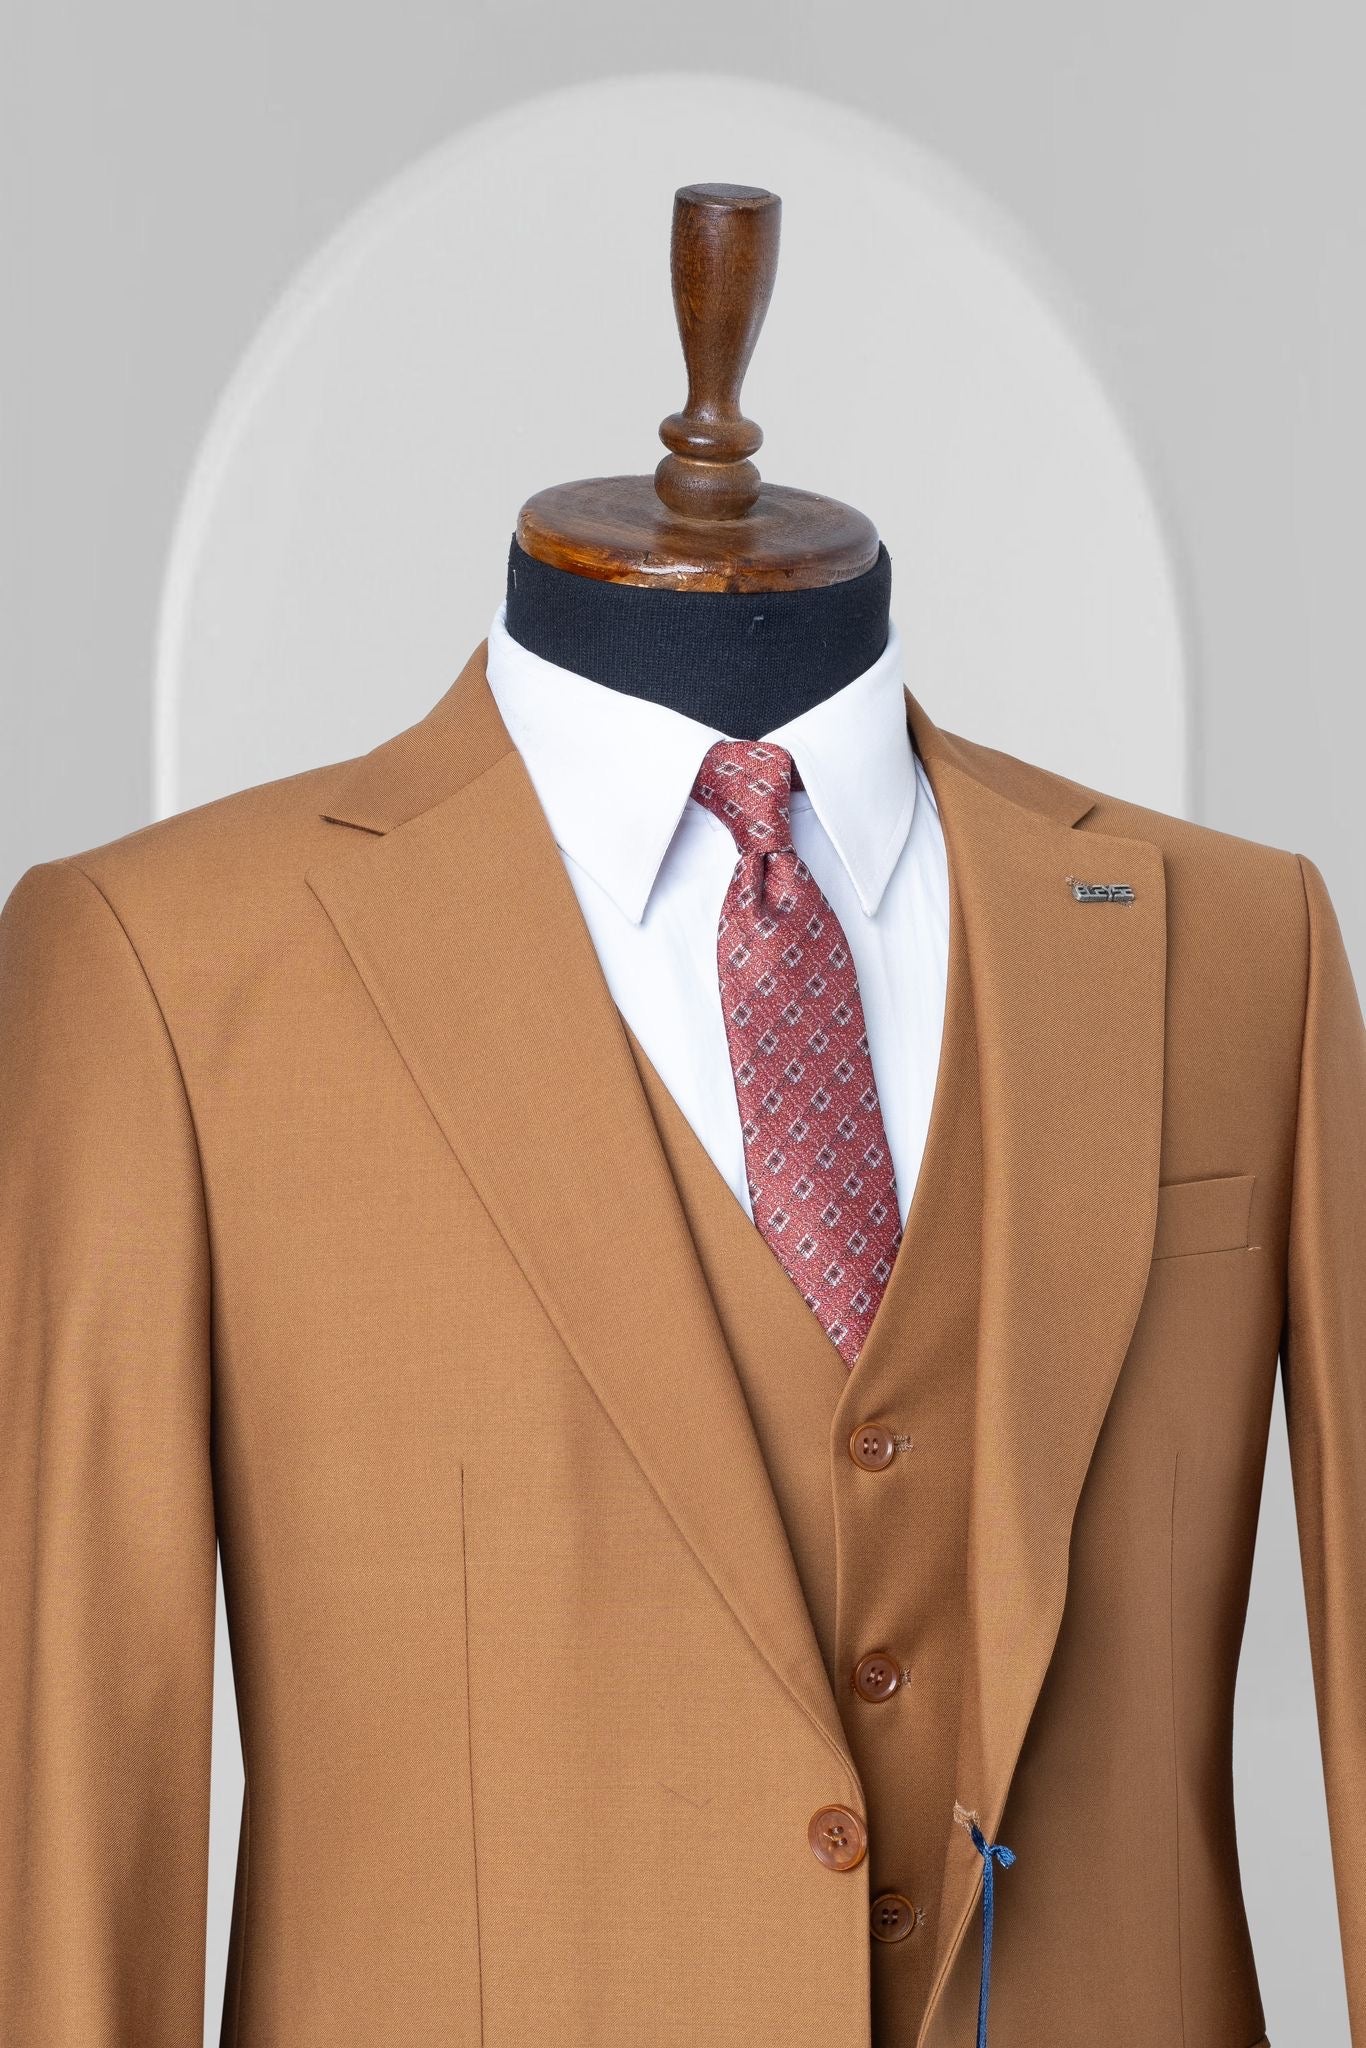 Turkish 3-Piece Suit Wholesale: Authentic 3-Piece Elegance for Discerning Retailers - 6 Suit Pack (Model: AA_Tur_4_288)